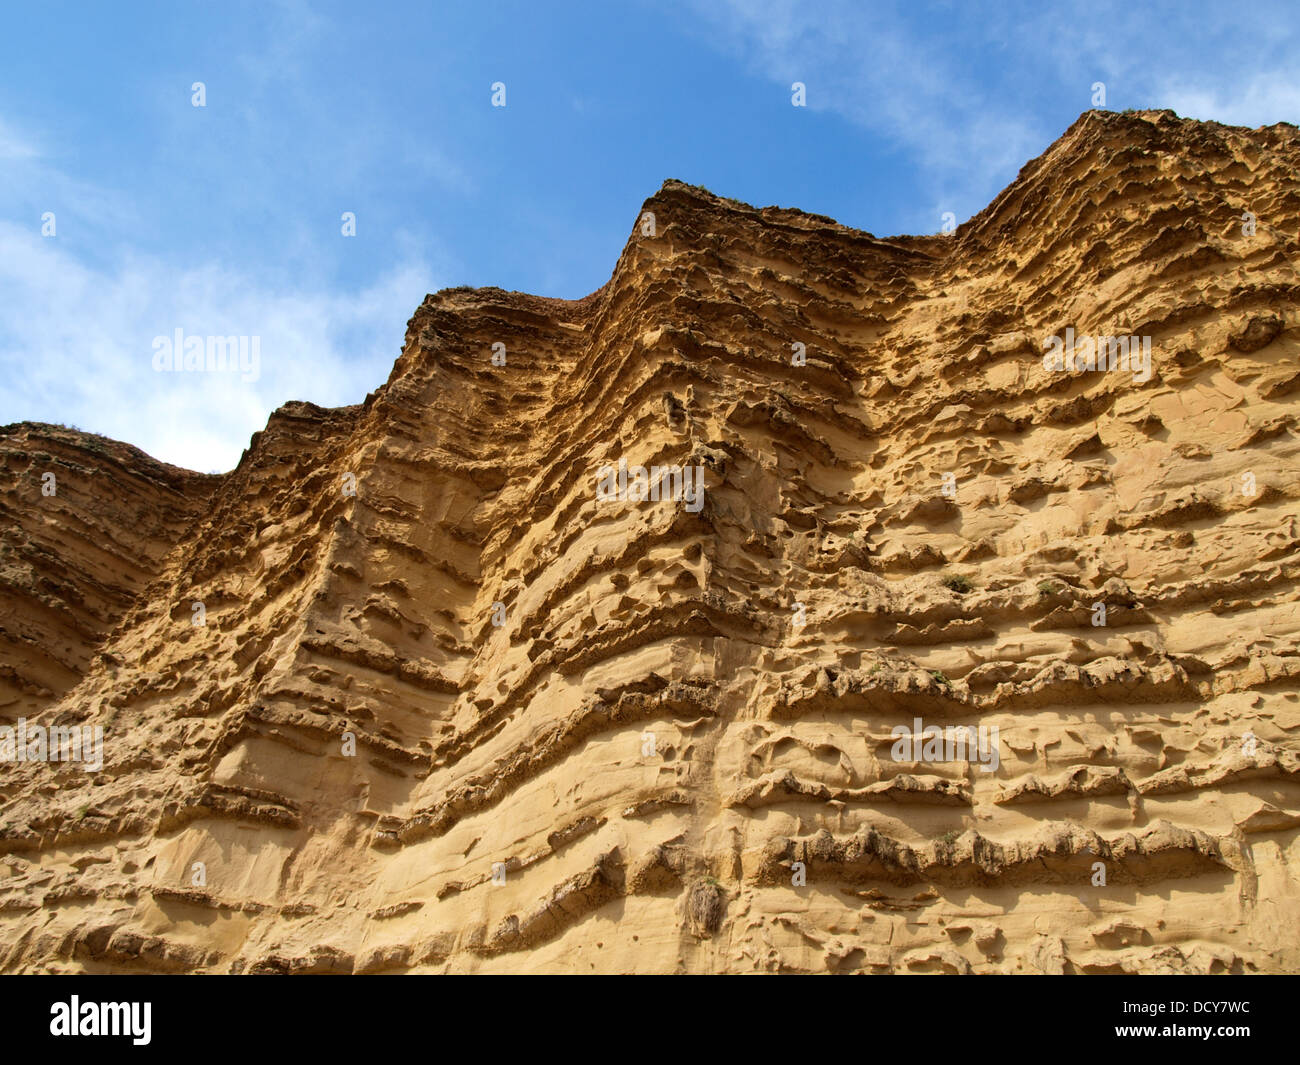 West bay sandstone cliffs, Dorset, UK 2013 Stock Photo